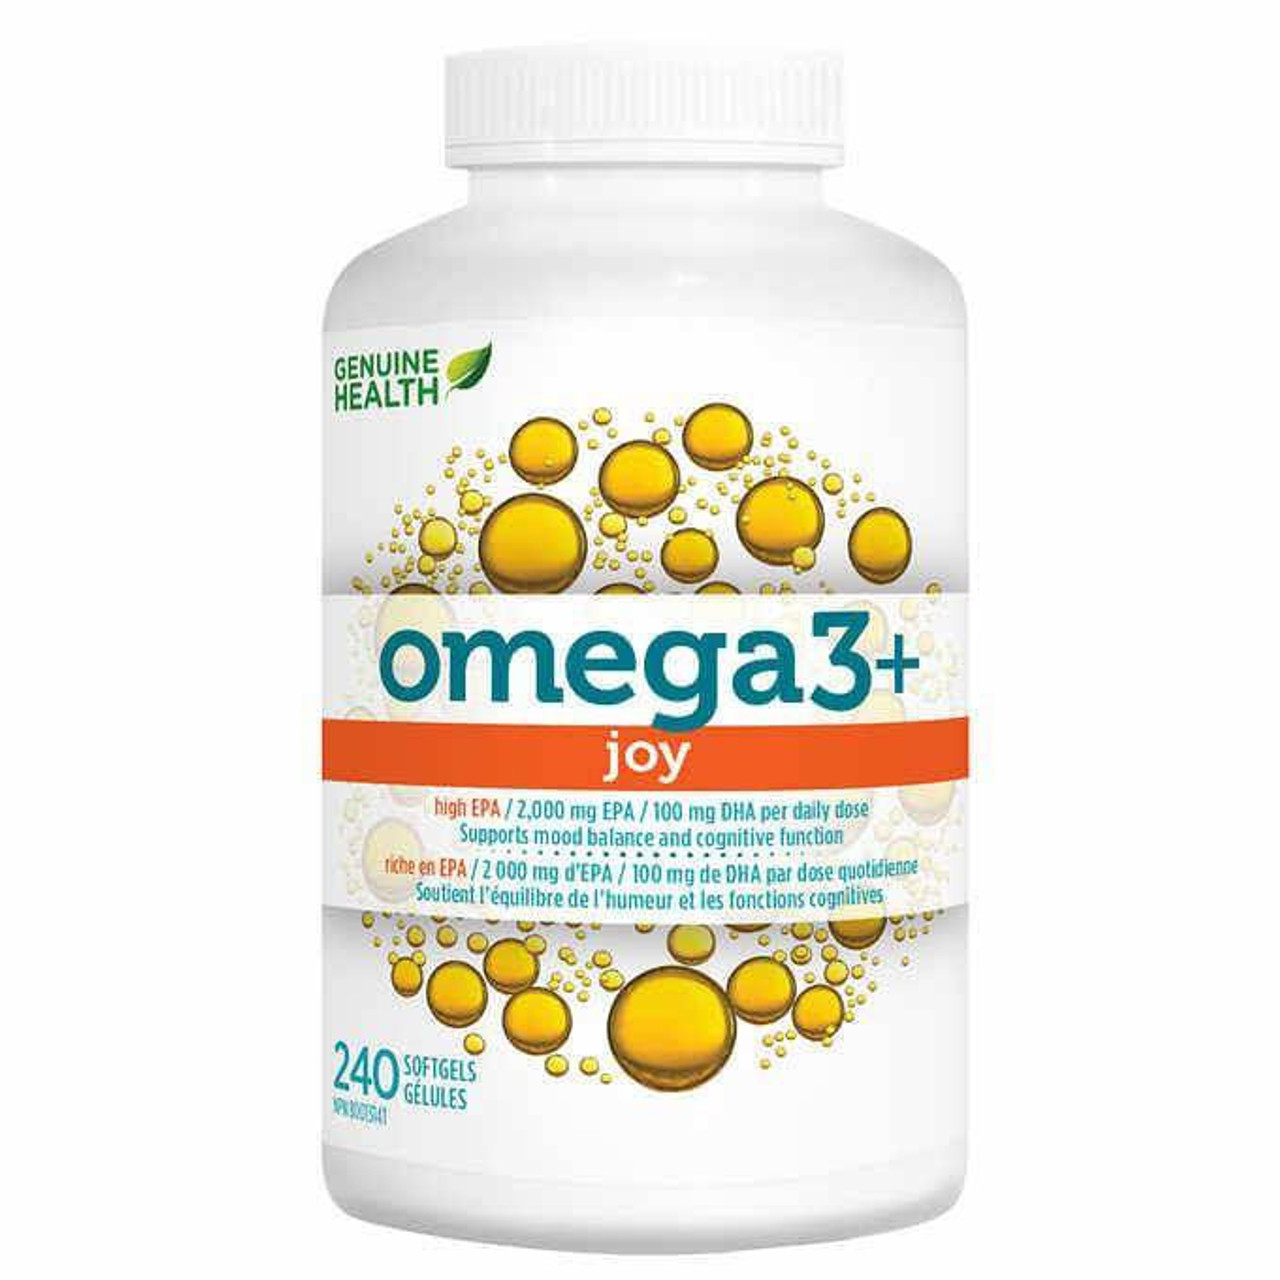 GENUINE HEALTH Genuine Health Omega 3+ Joy Fish Oil Supplement - 240 Softgels | Mood & Heart Health 